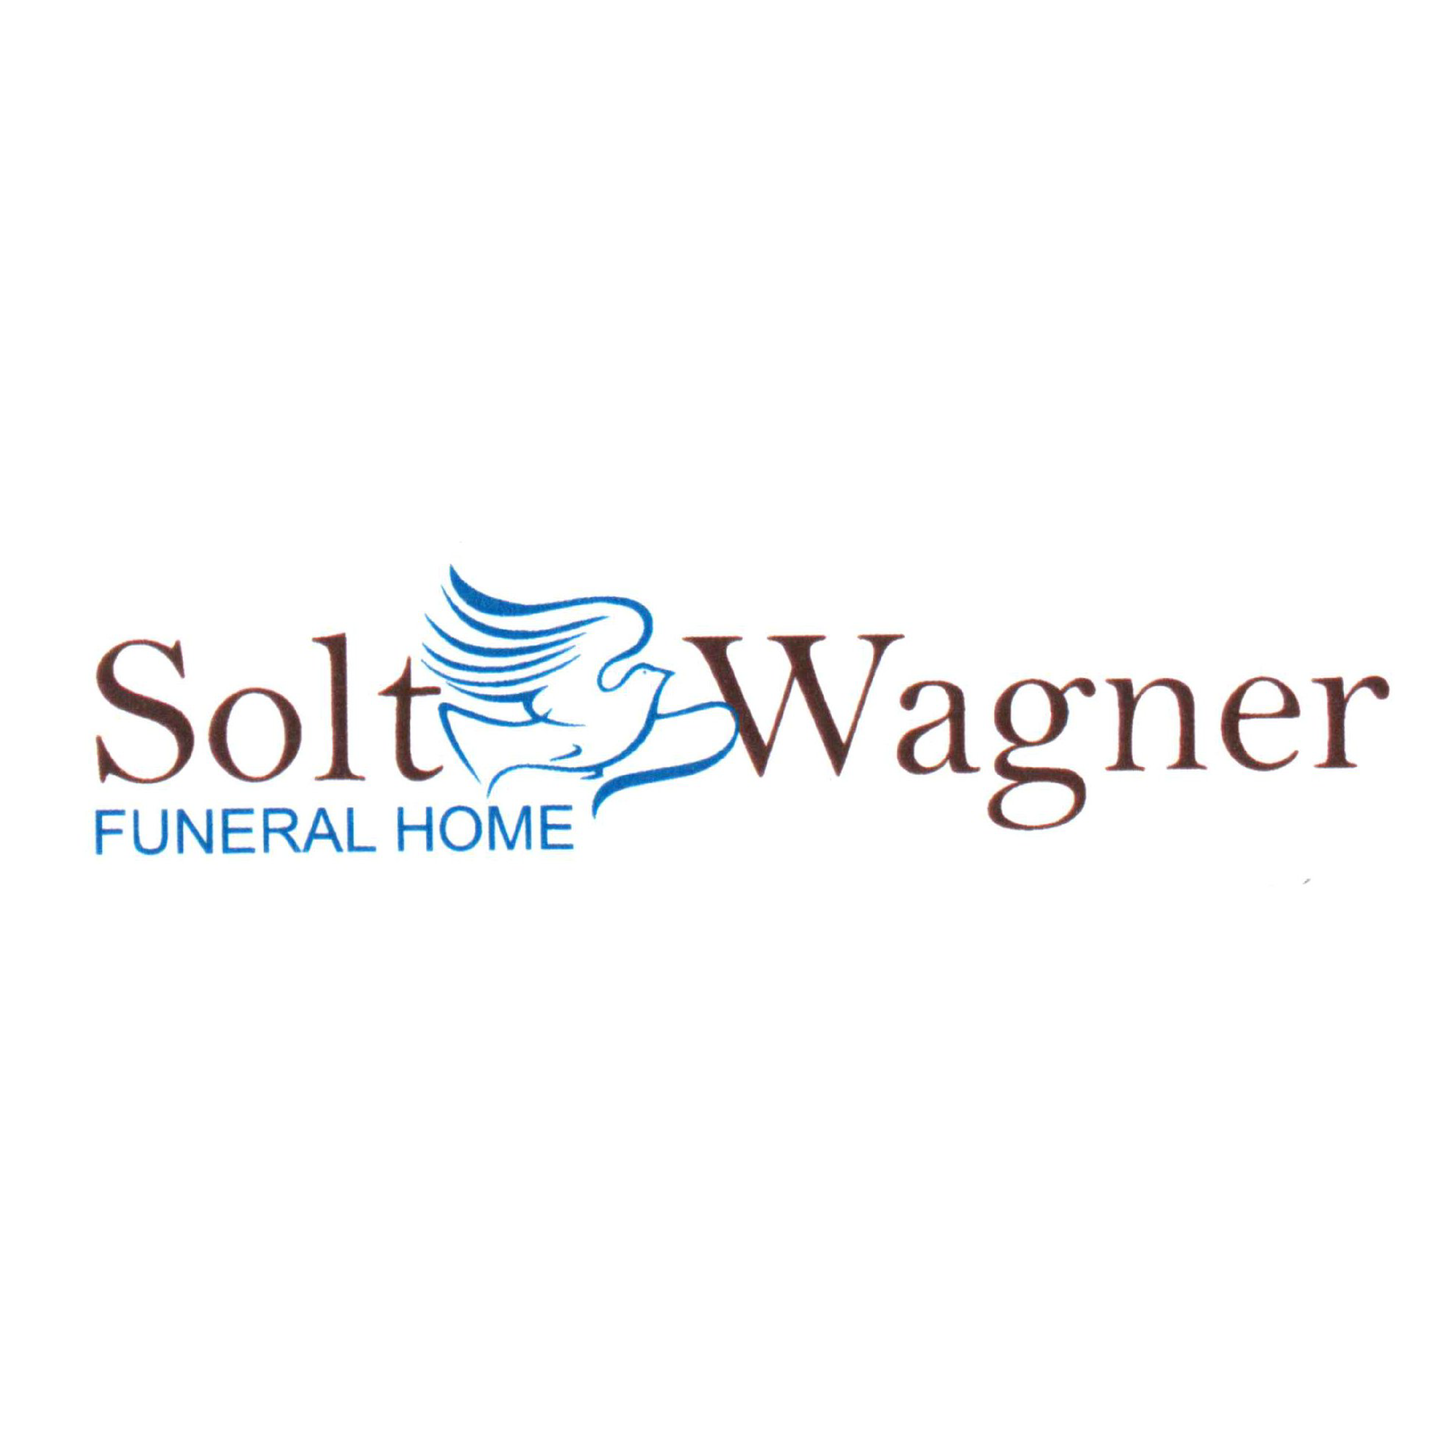 Solt Wagner Funeral Home